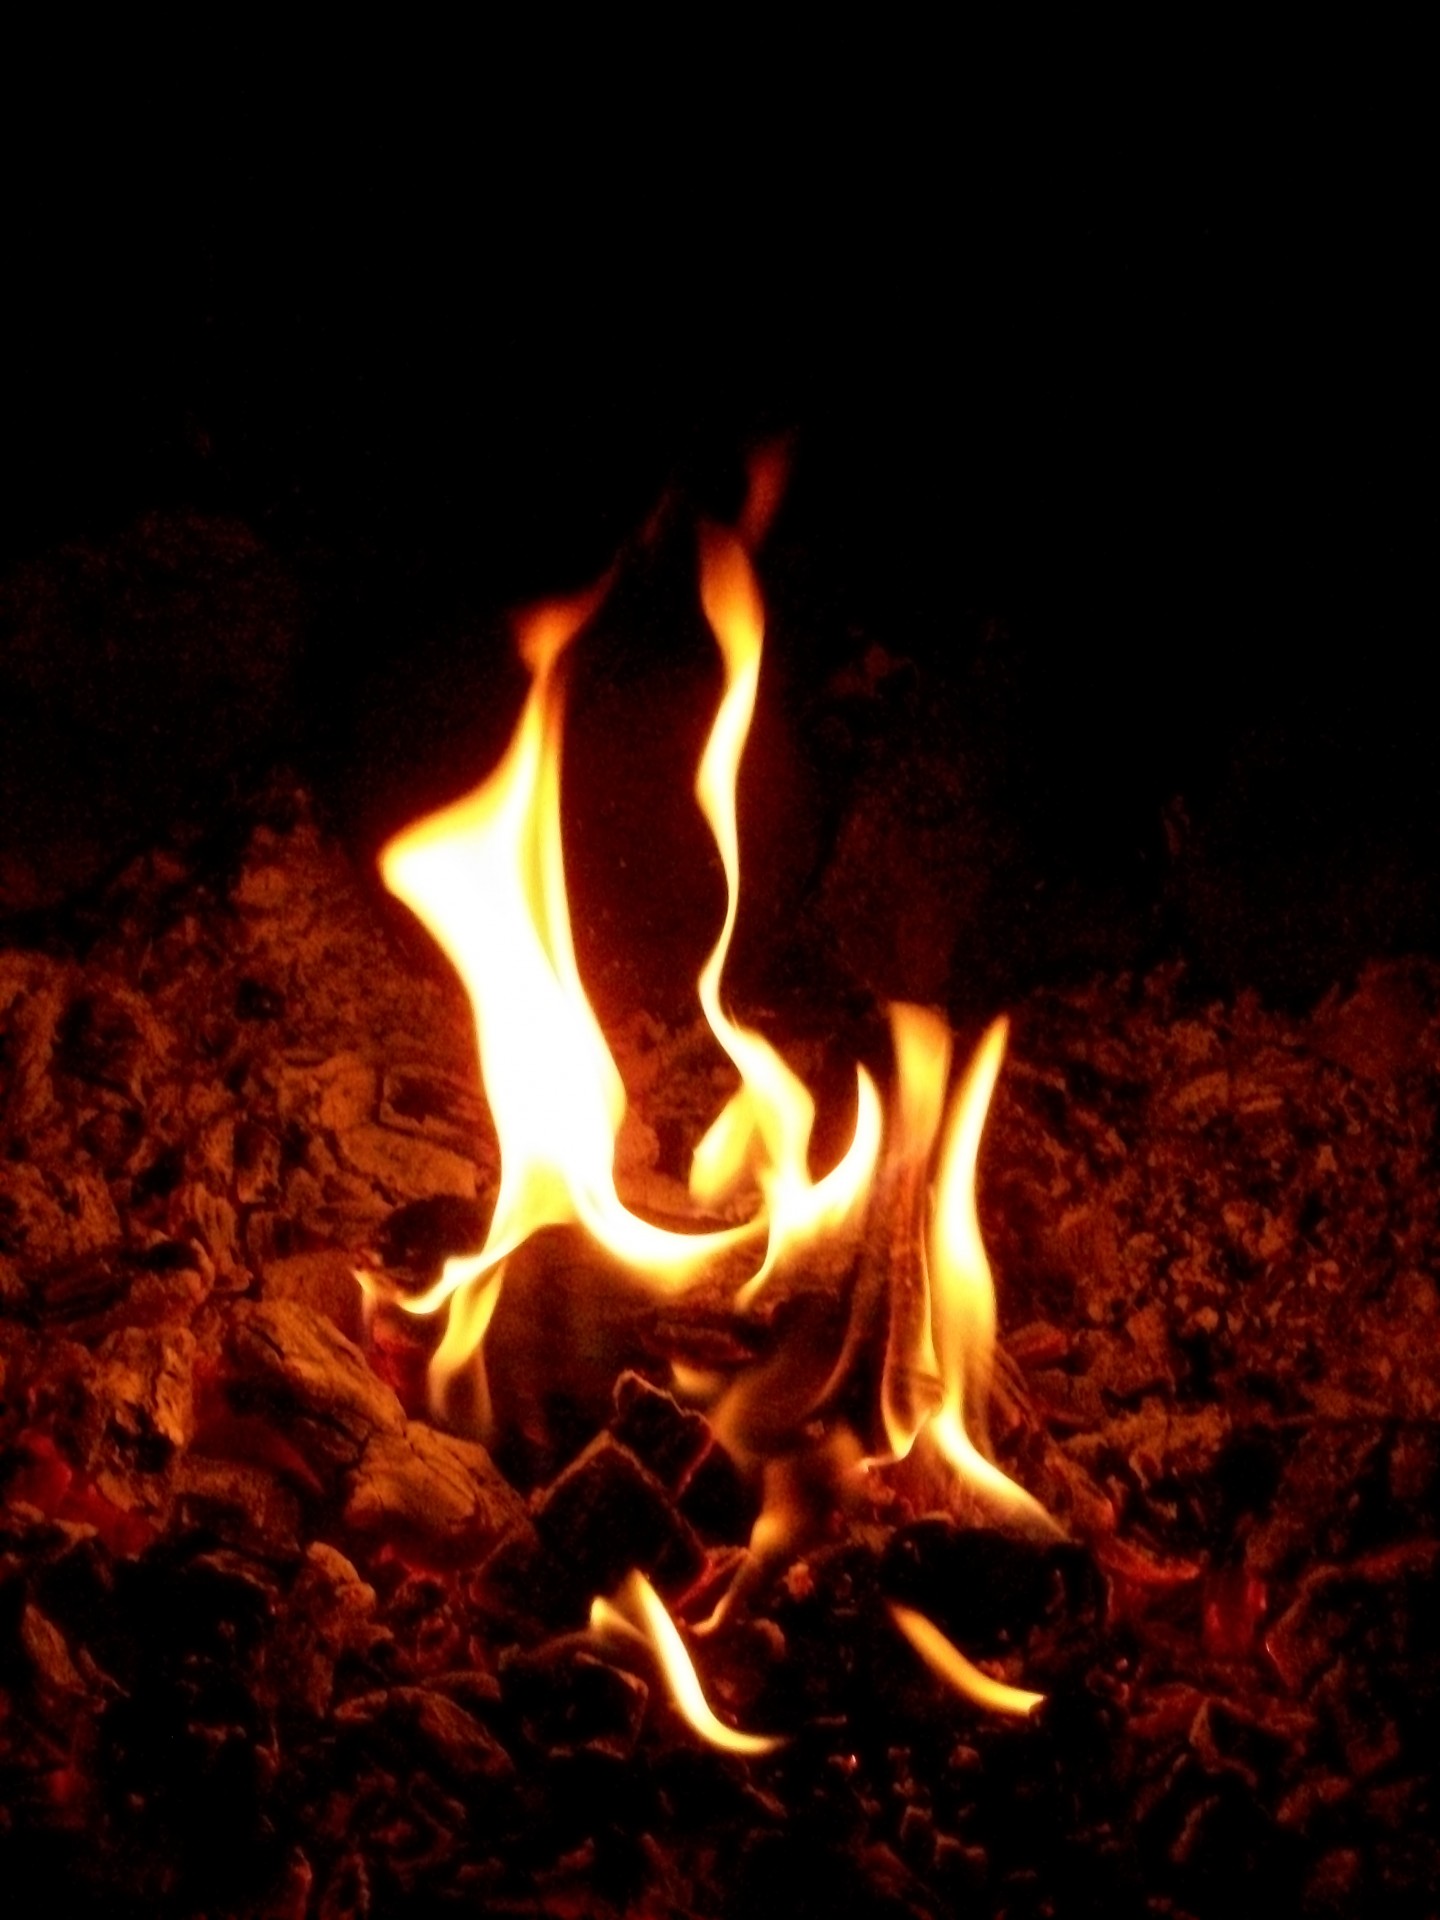 A bonfire pit with warm fire inside